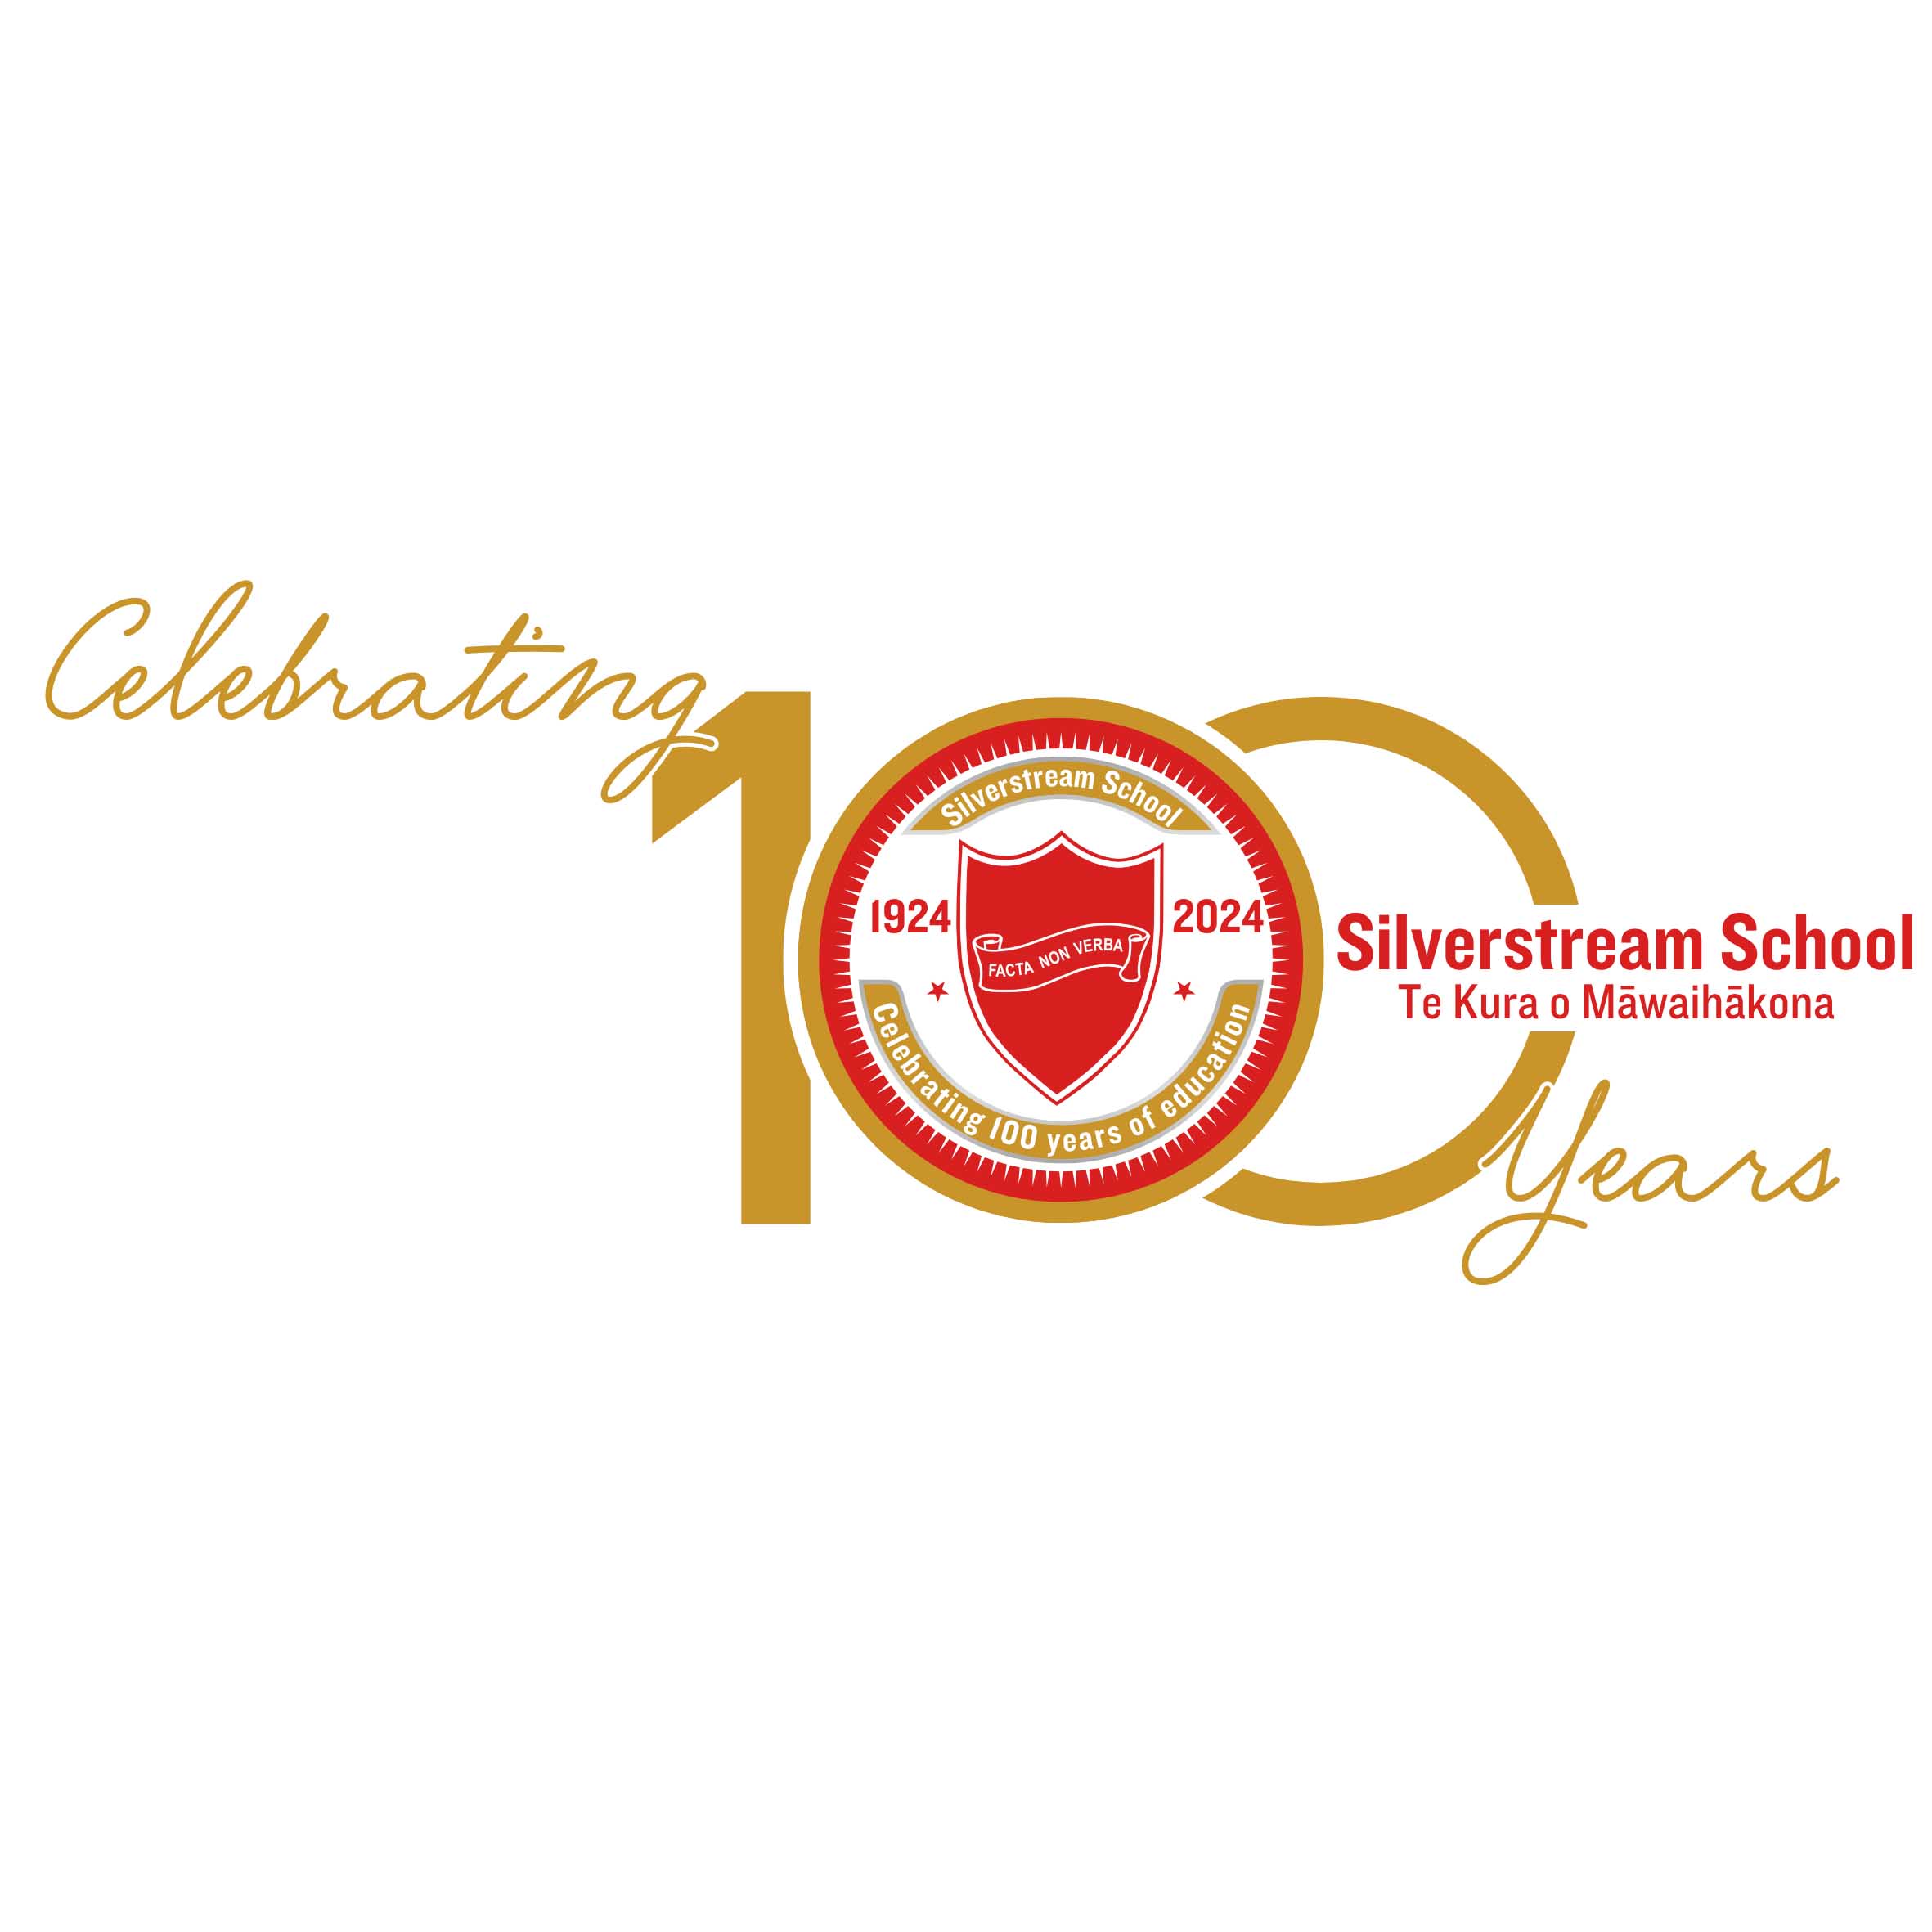 Silverstream School 100 Years